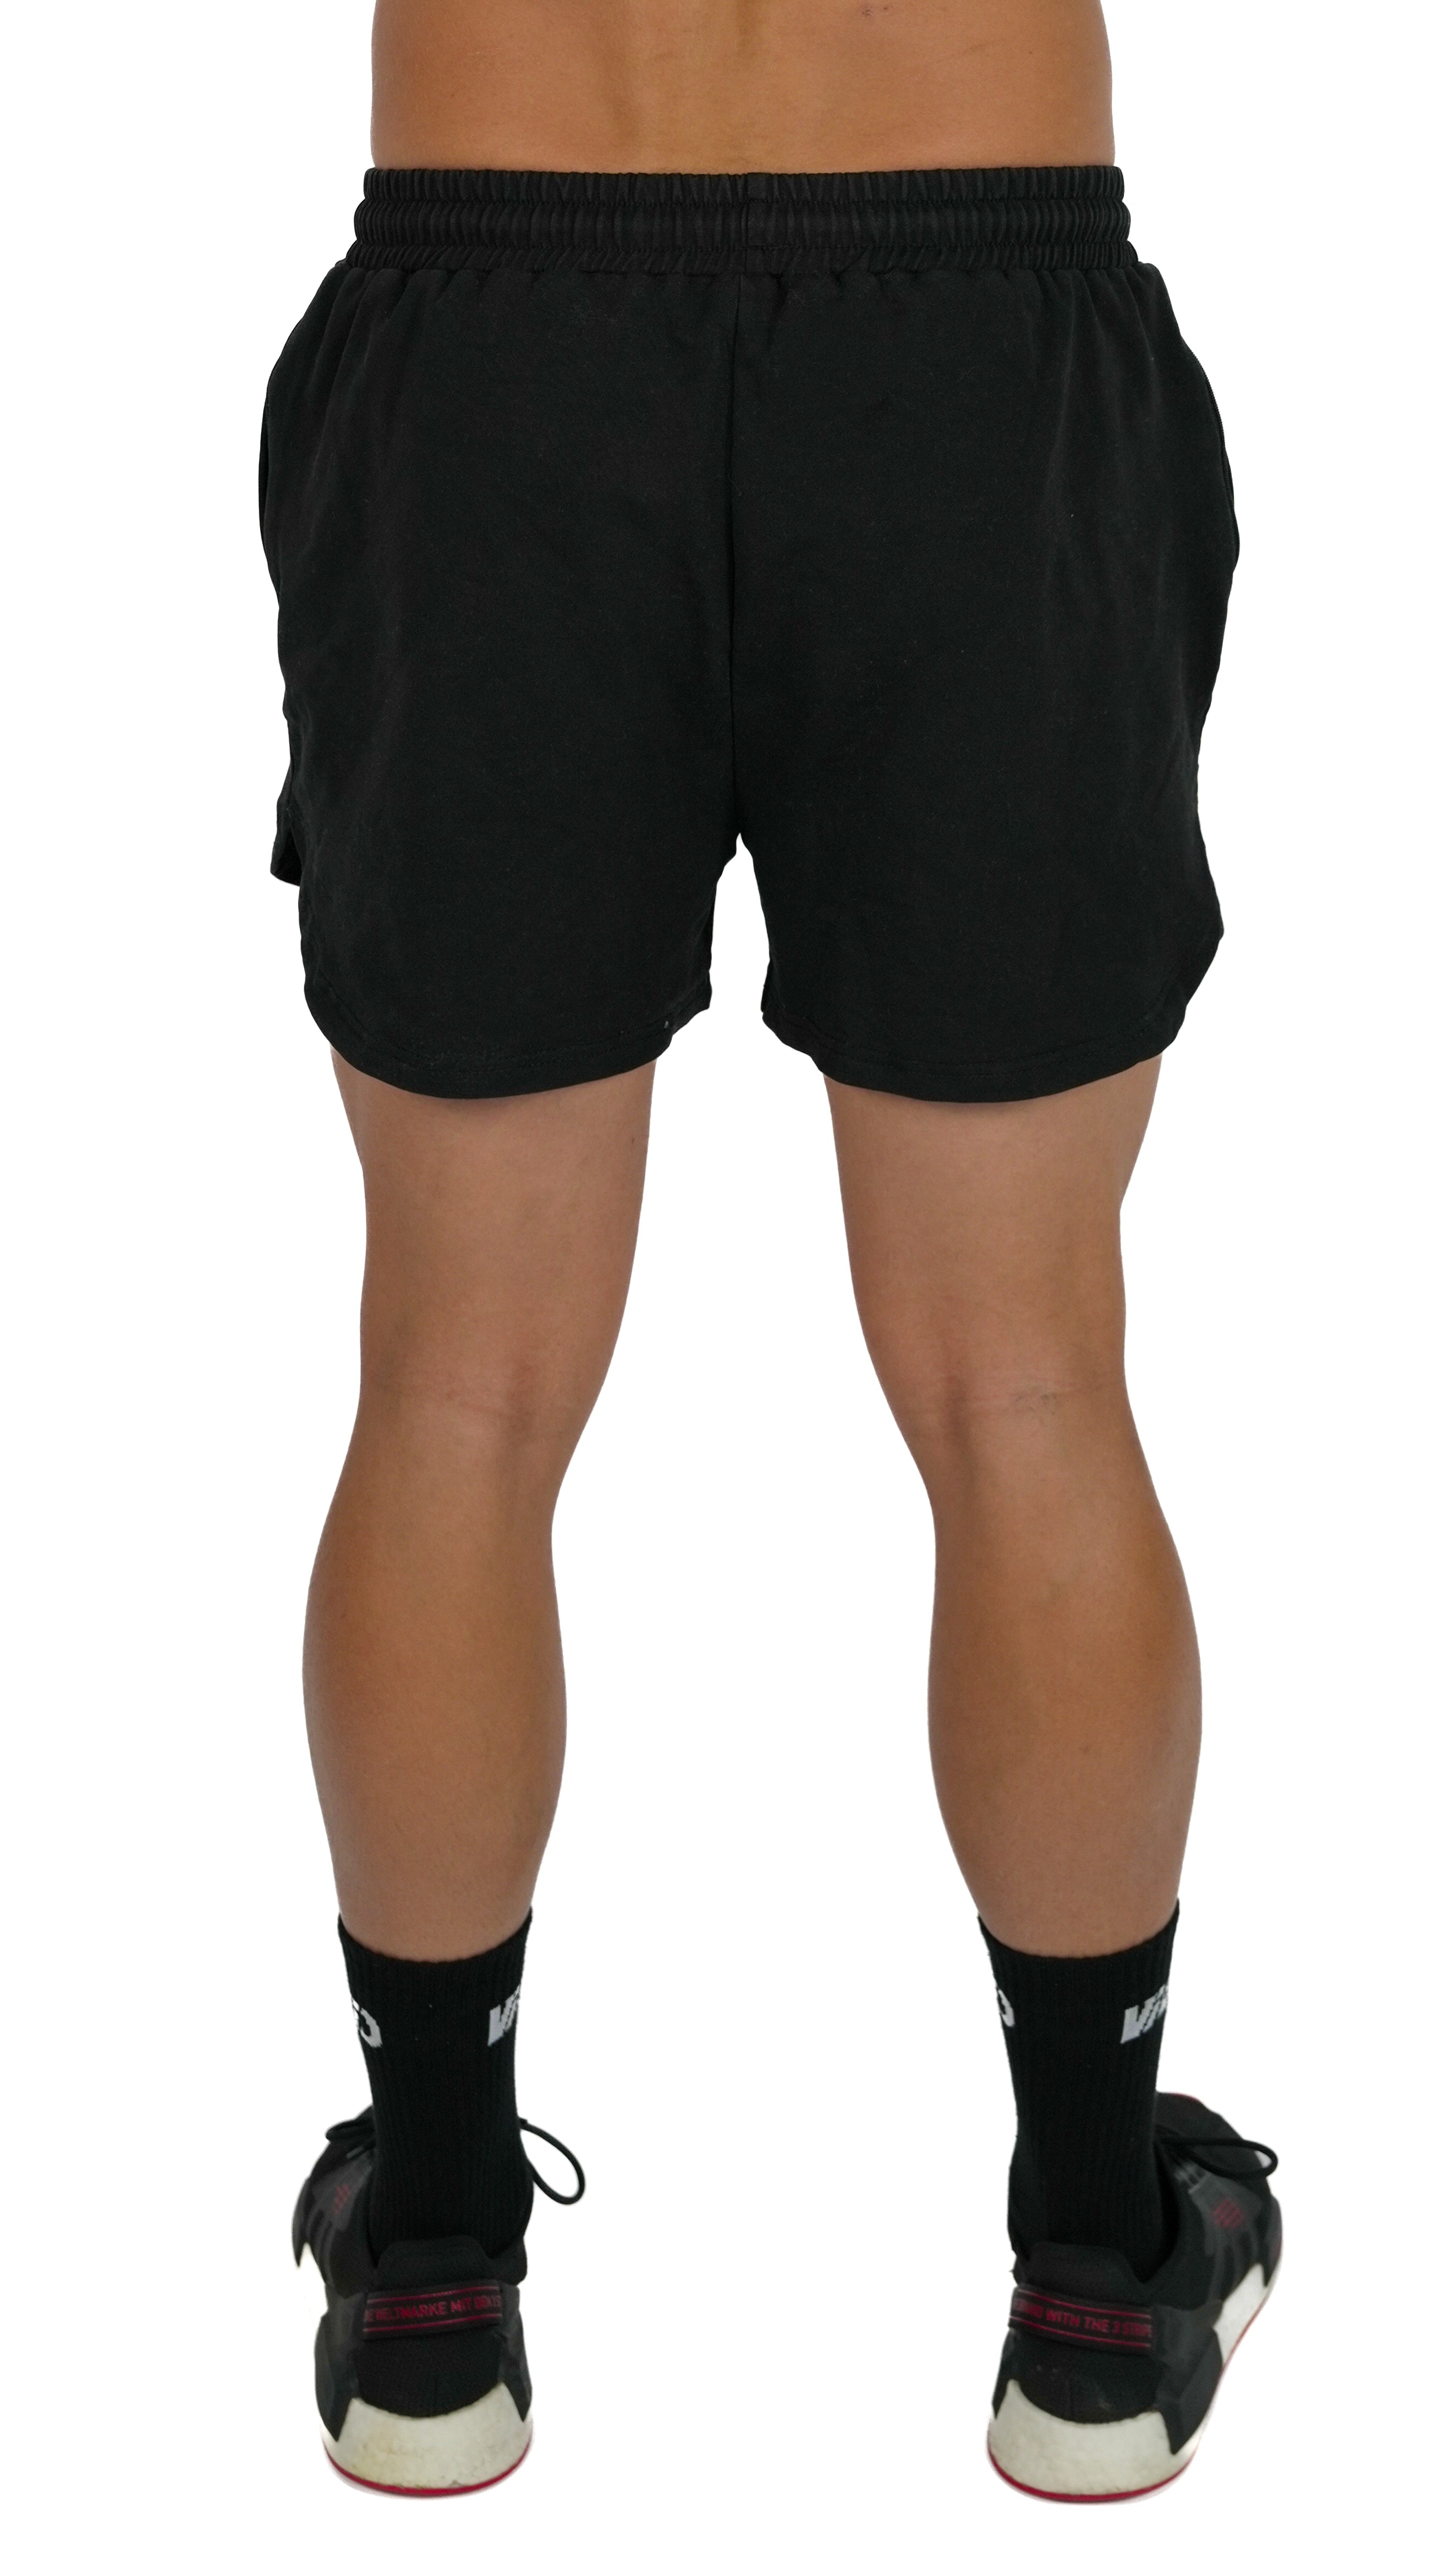 Quad Cut Shorts - Black